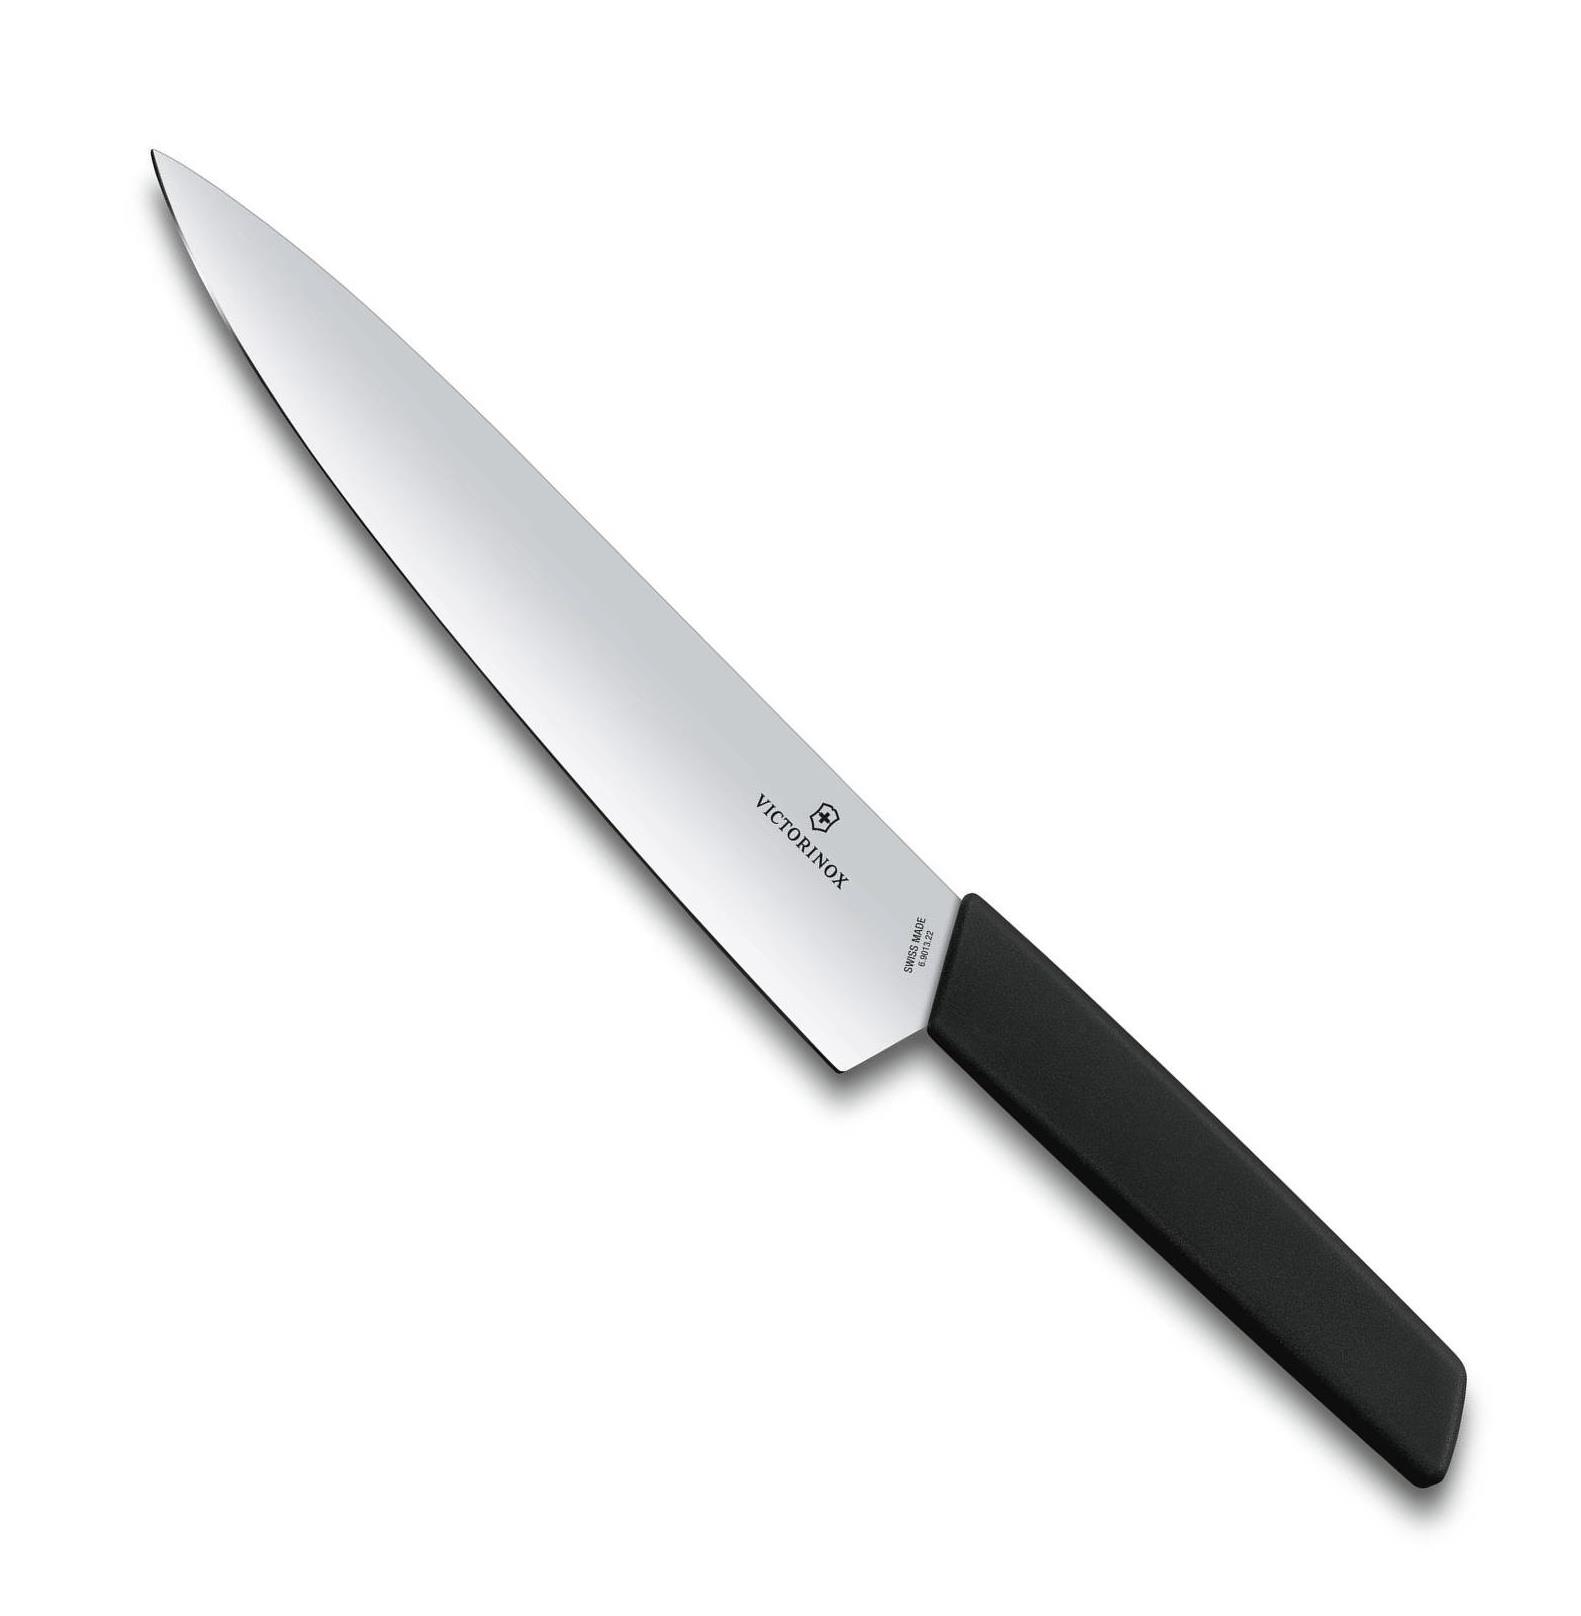 Kuchyňský nůž 22 cm černý SWISS MODERN - Victorinox